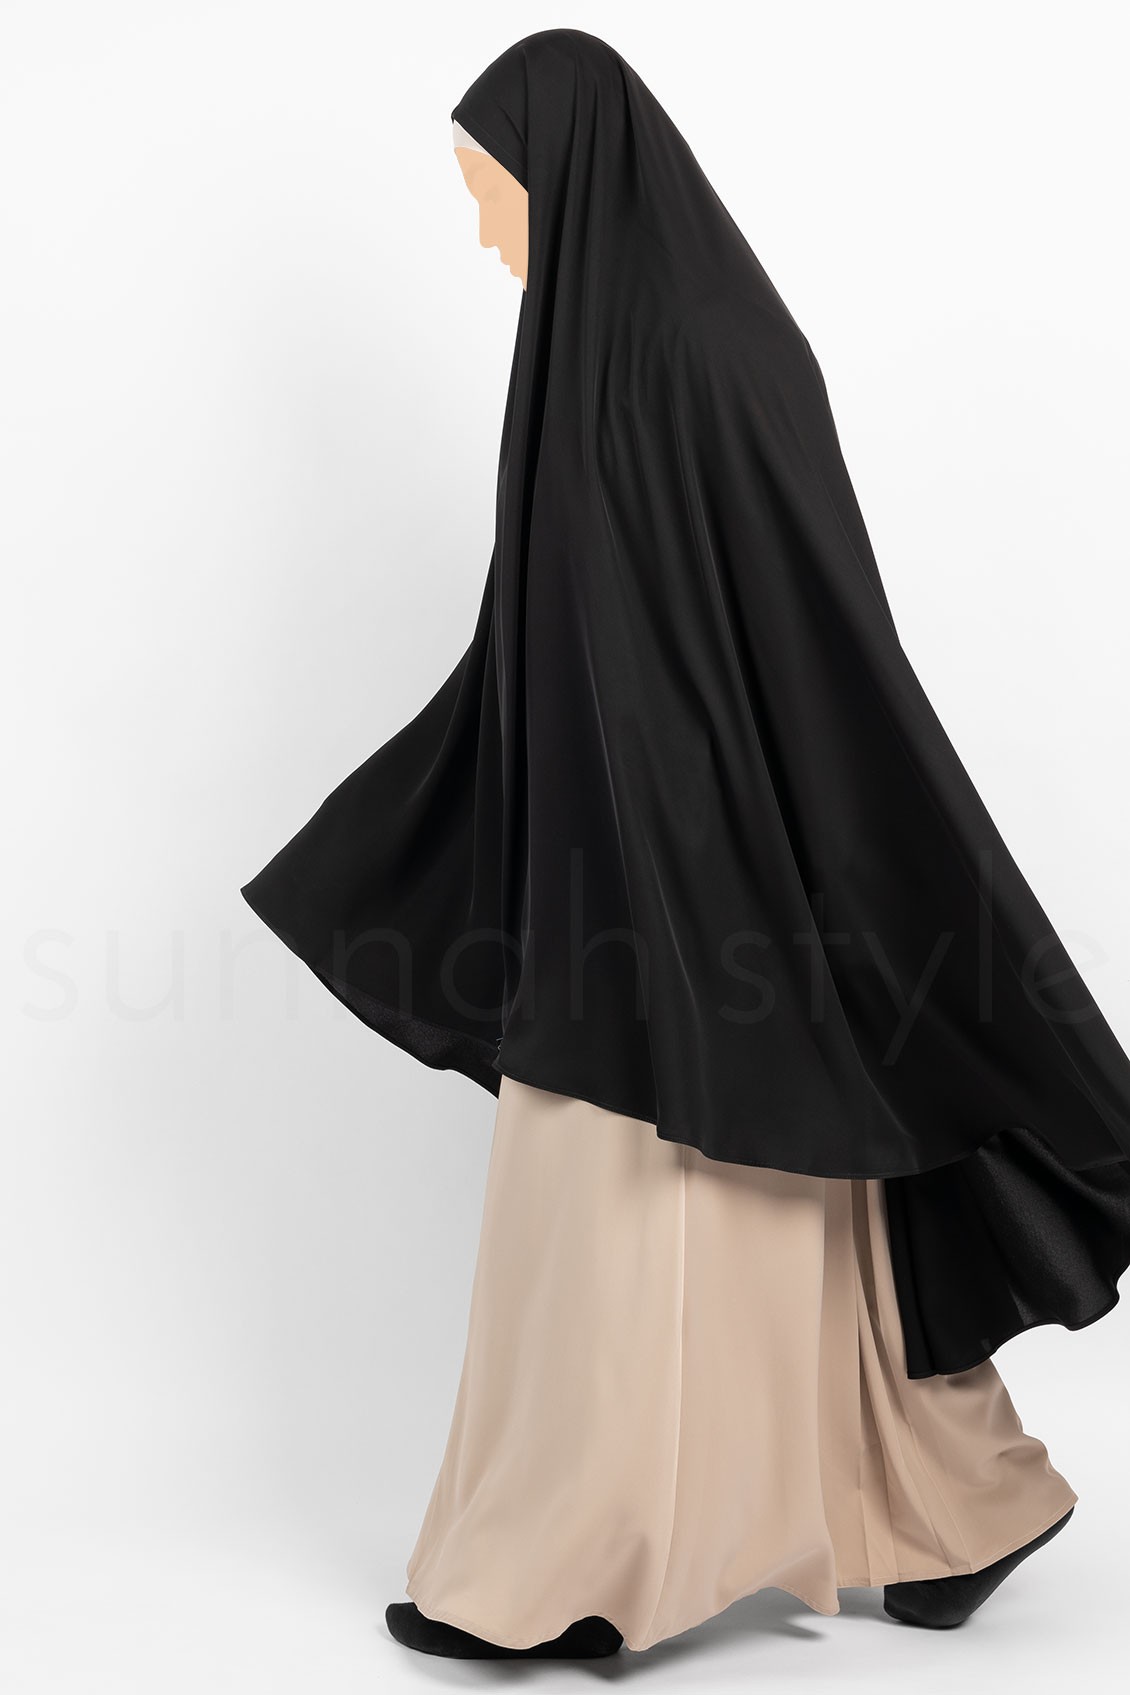 Sunnah Style Essentials Khimar Full Length Black